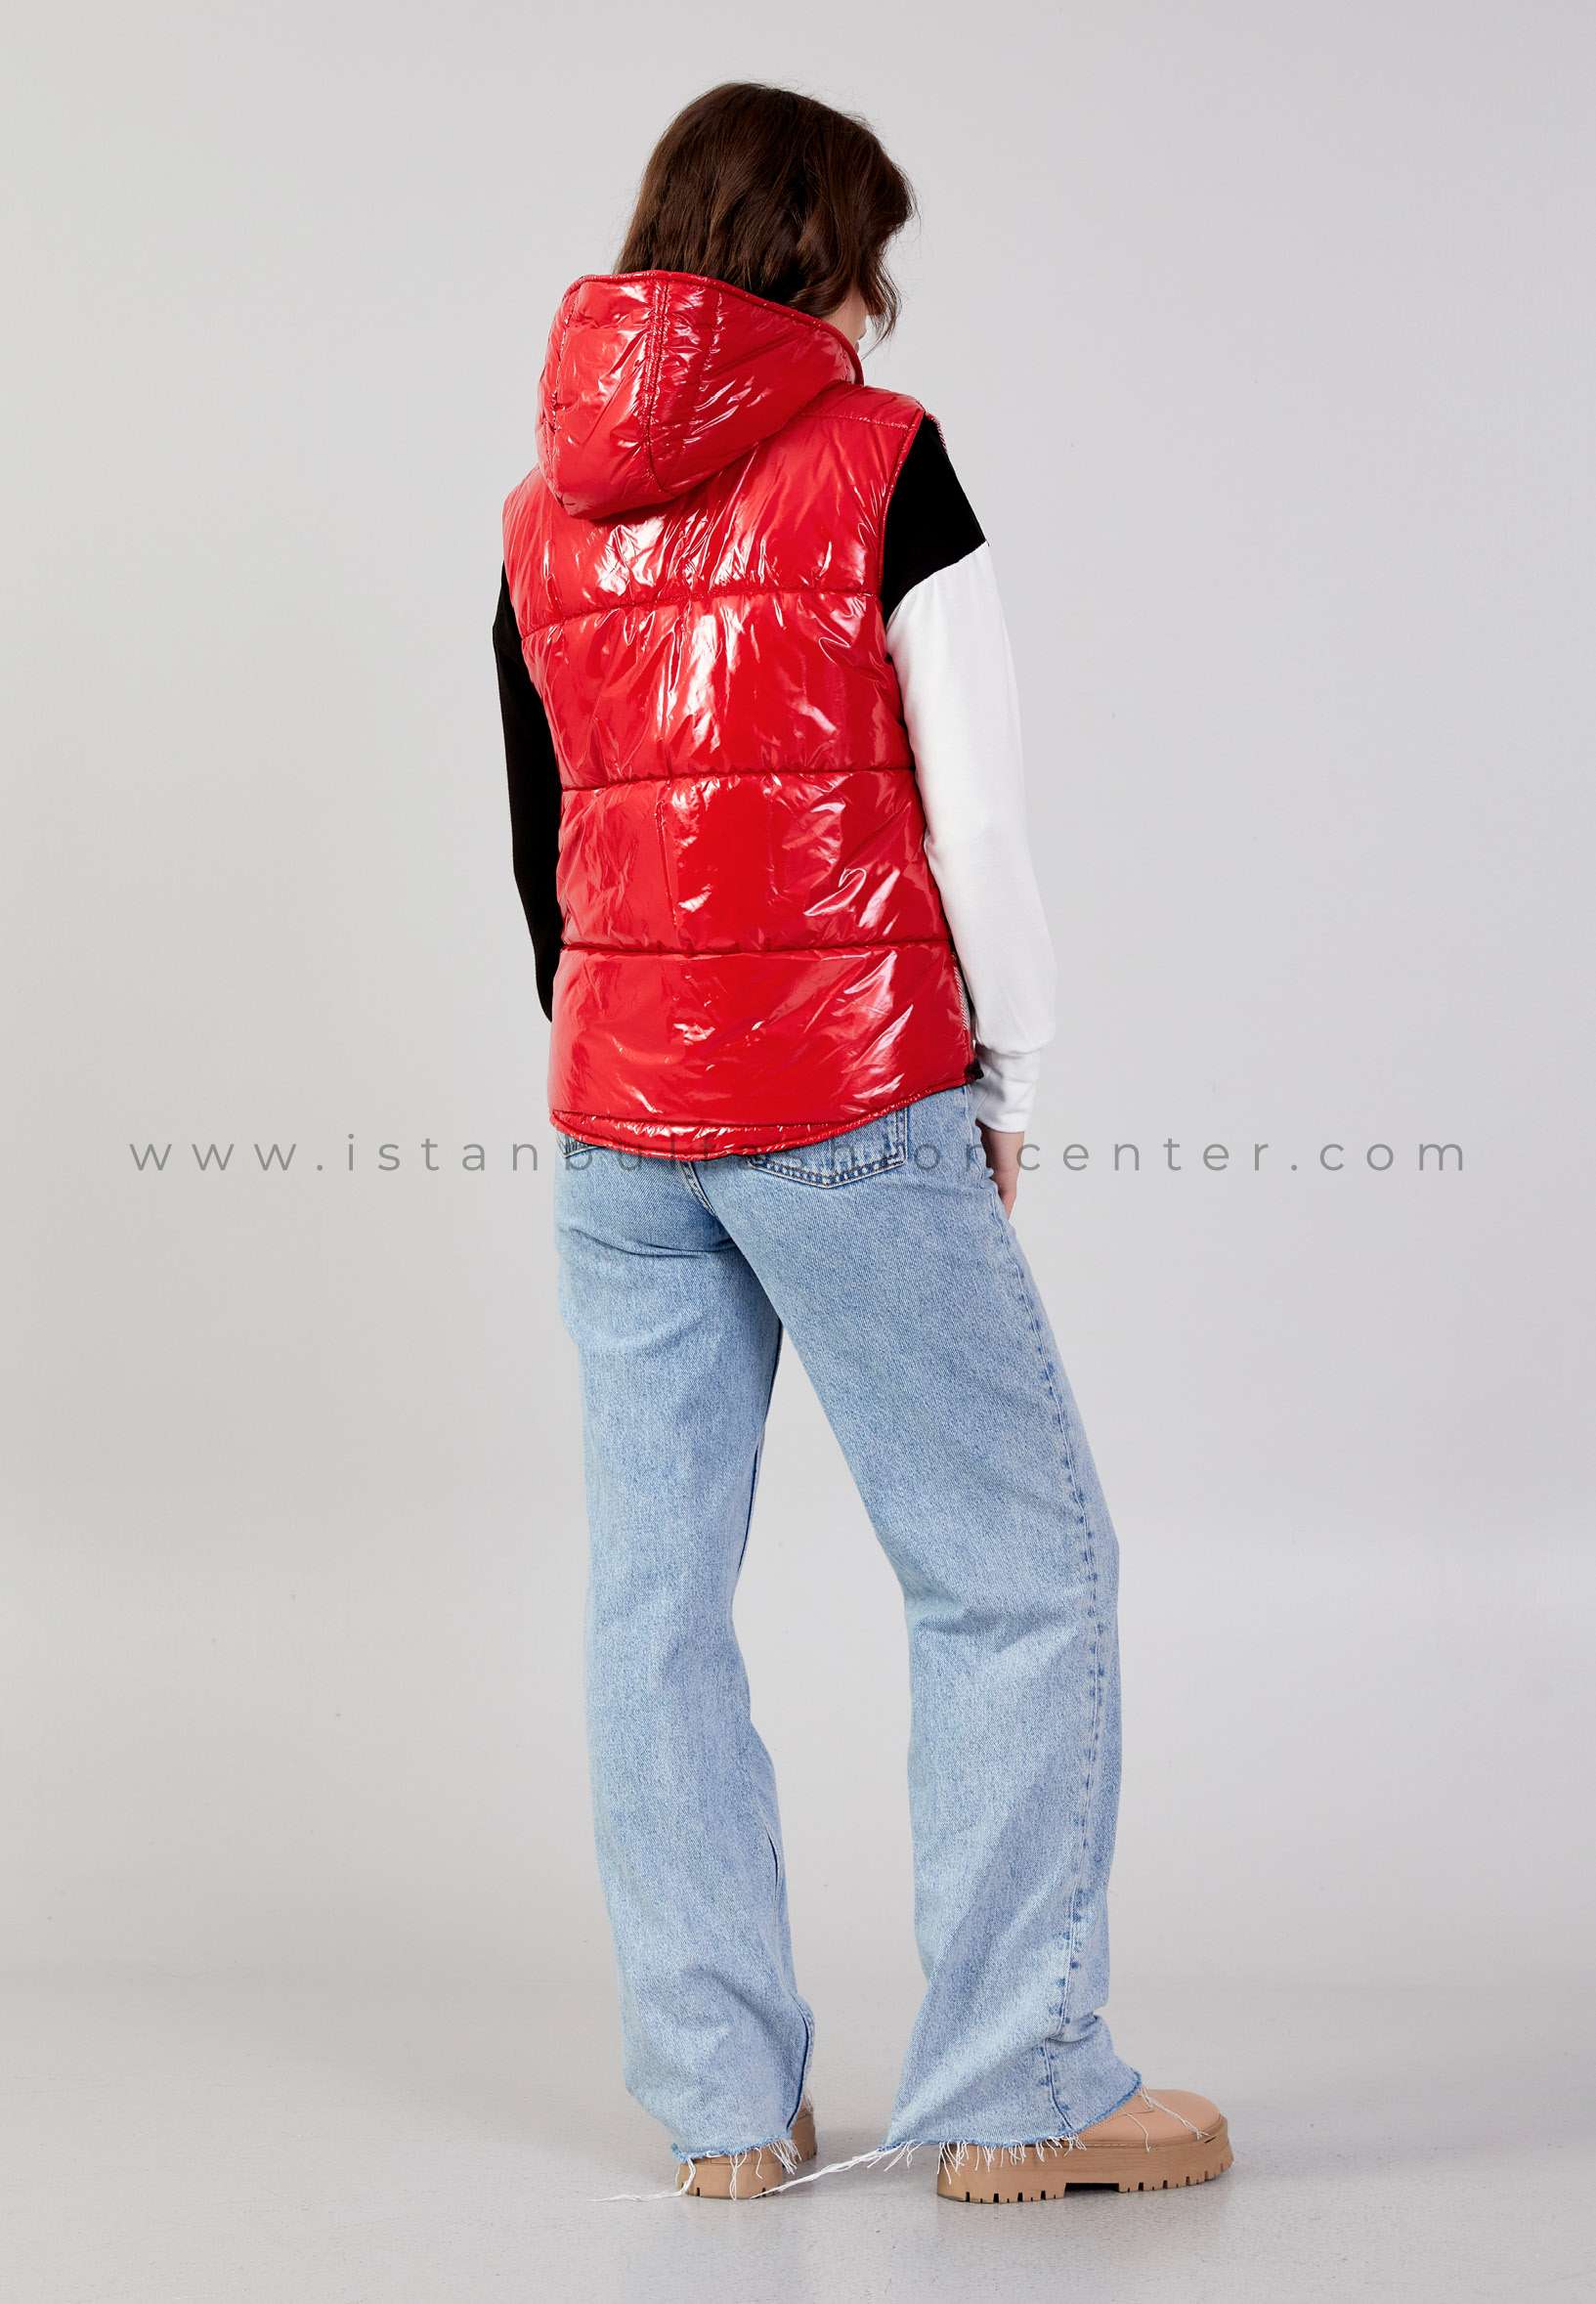 YSATİS Sleeveless Plaid Regular Red Black Vest Yst2223.1200105kır